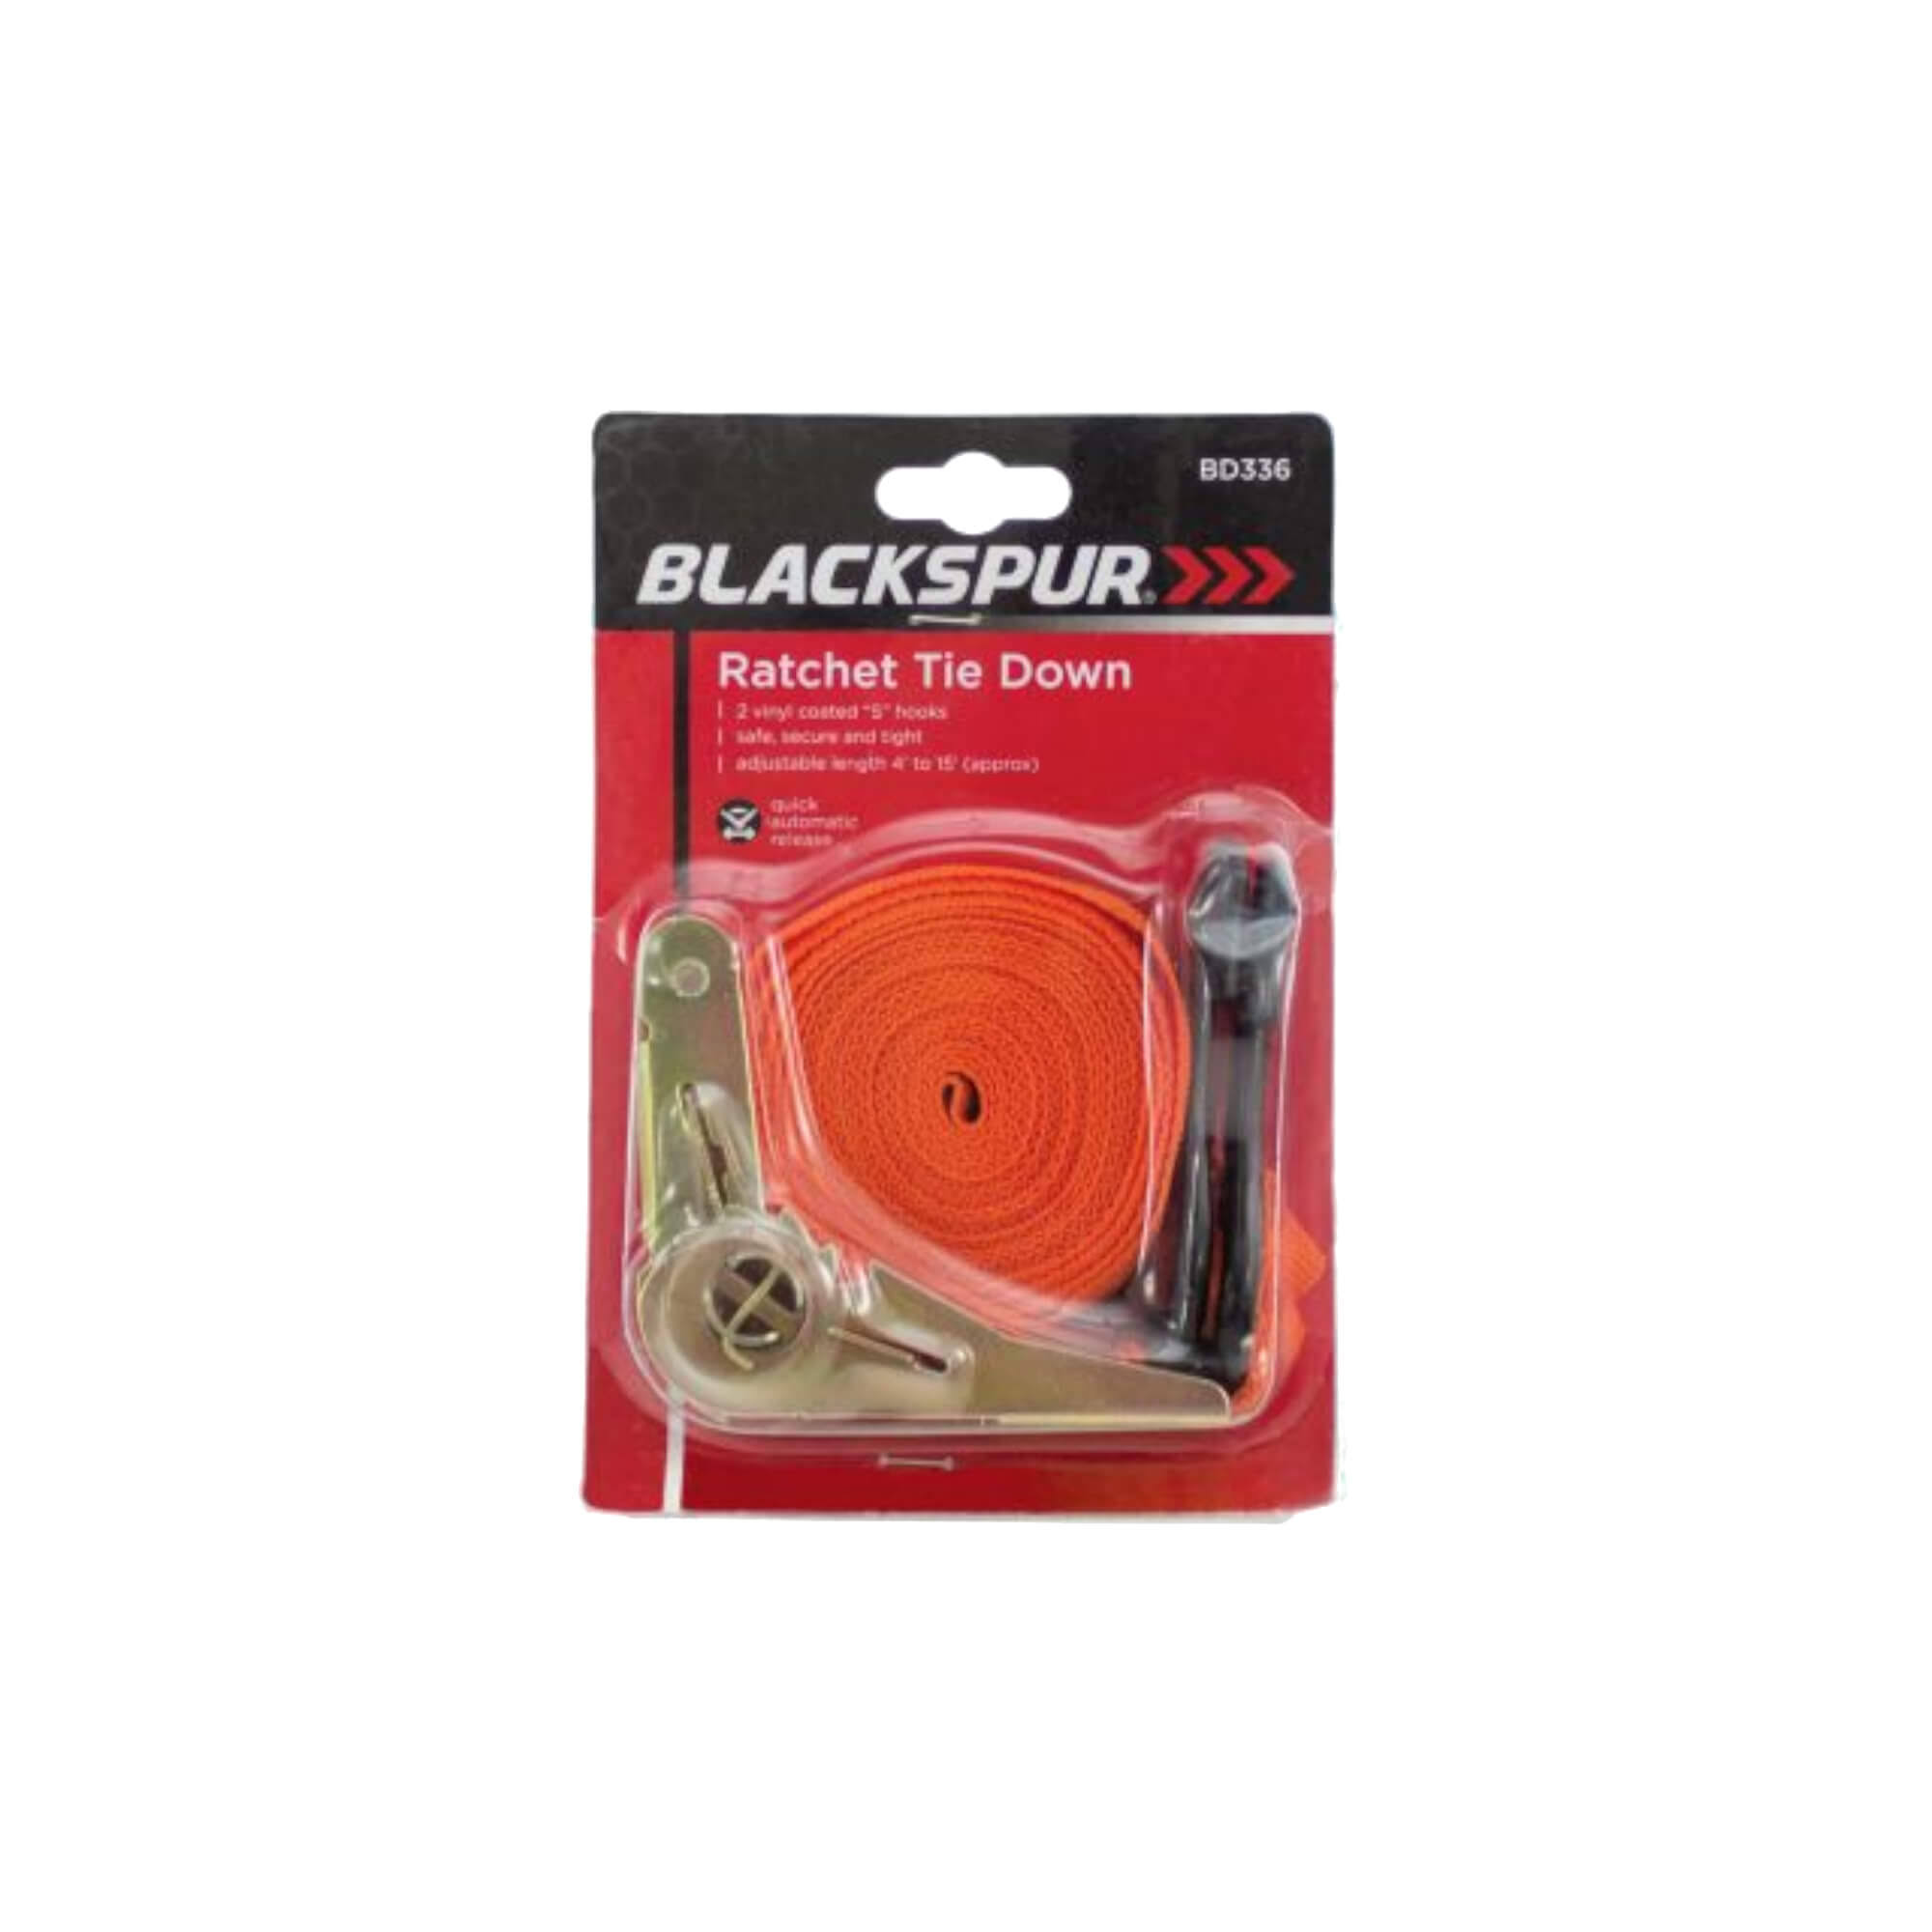 Blackspur BB-BD336 Ratchet Tie Down